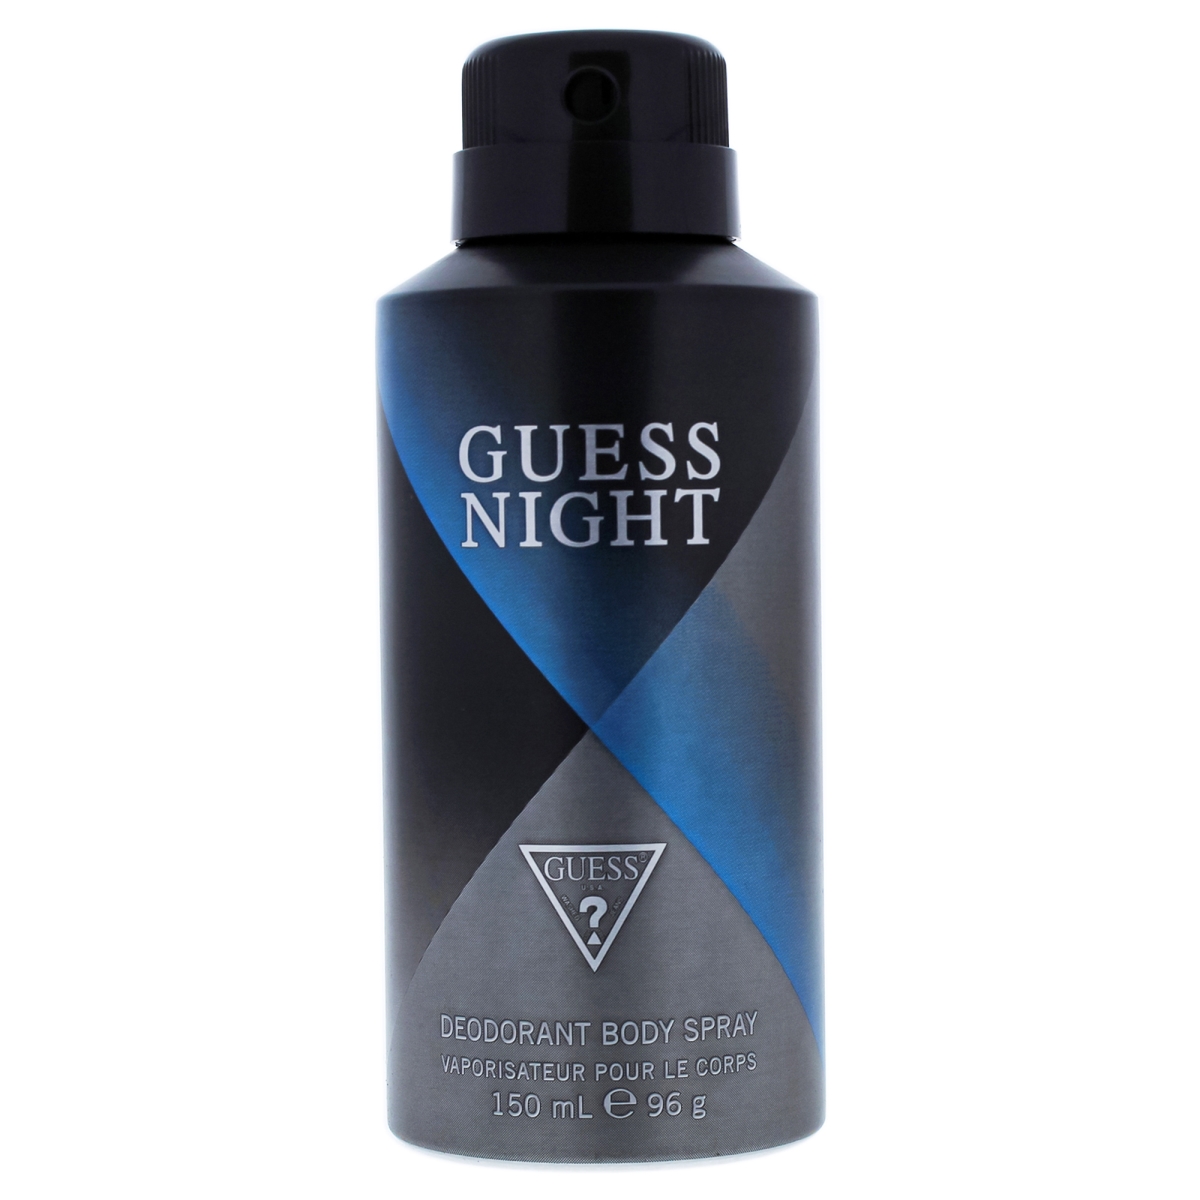 I0089322 Night Deodorant Body Spray For Men - 5 Oz